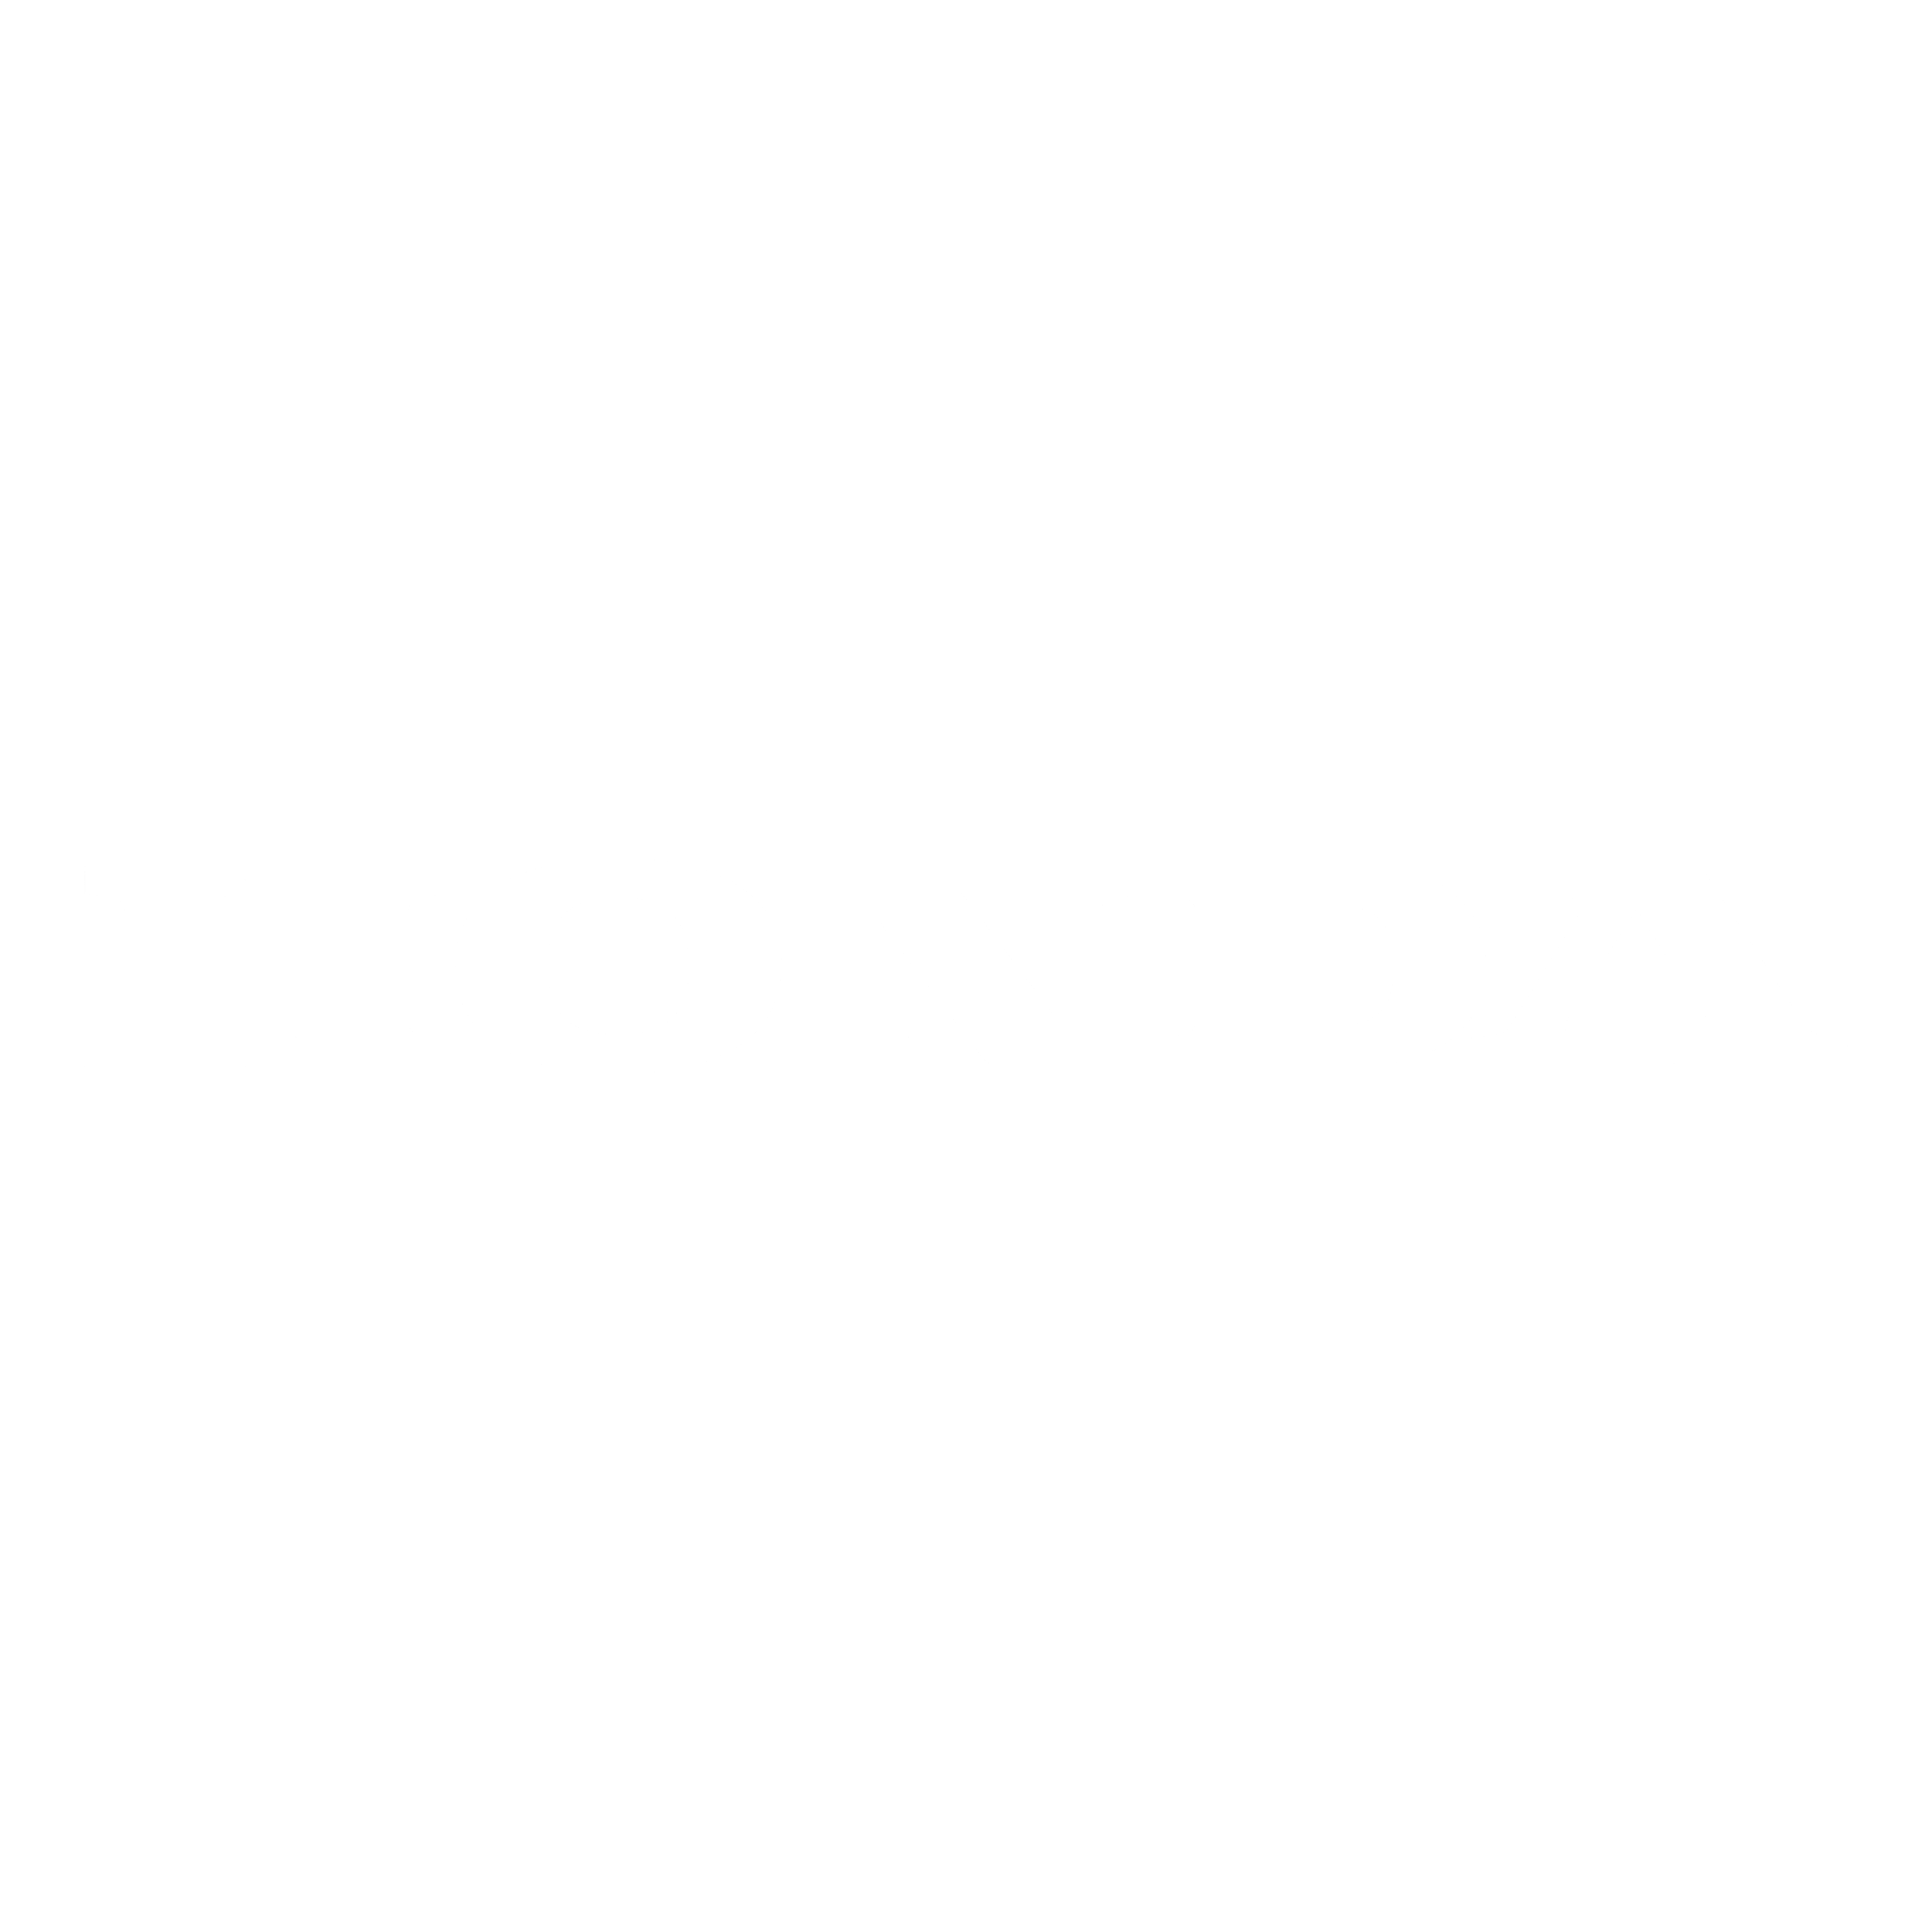 honda-3-logo-black-and-white.png